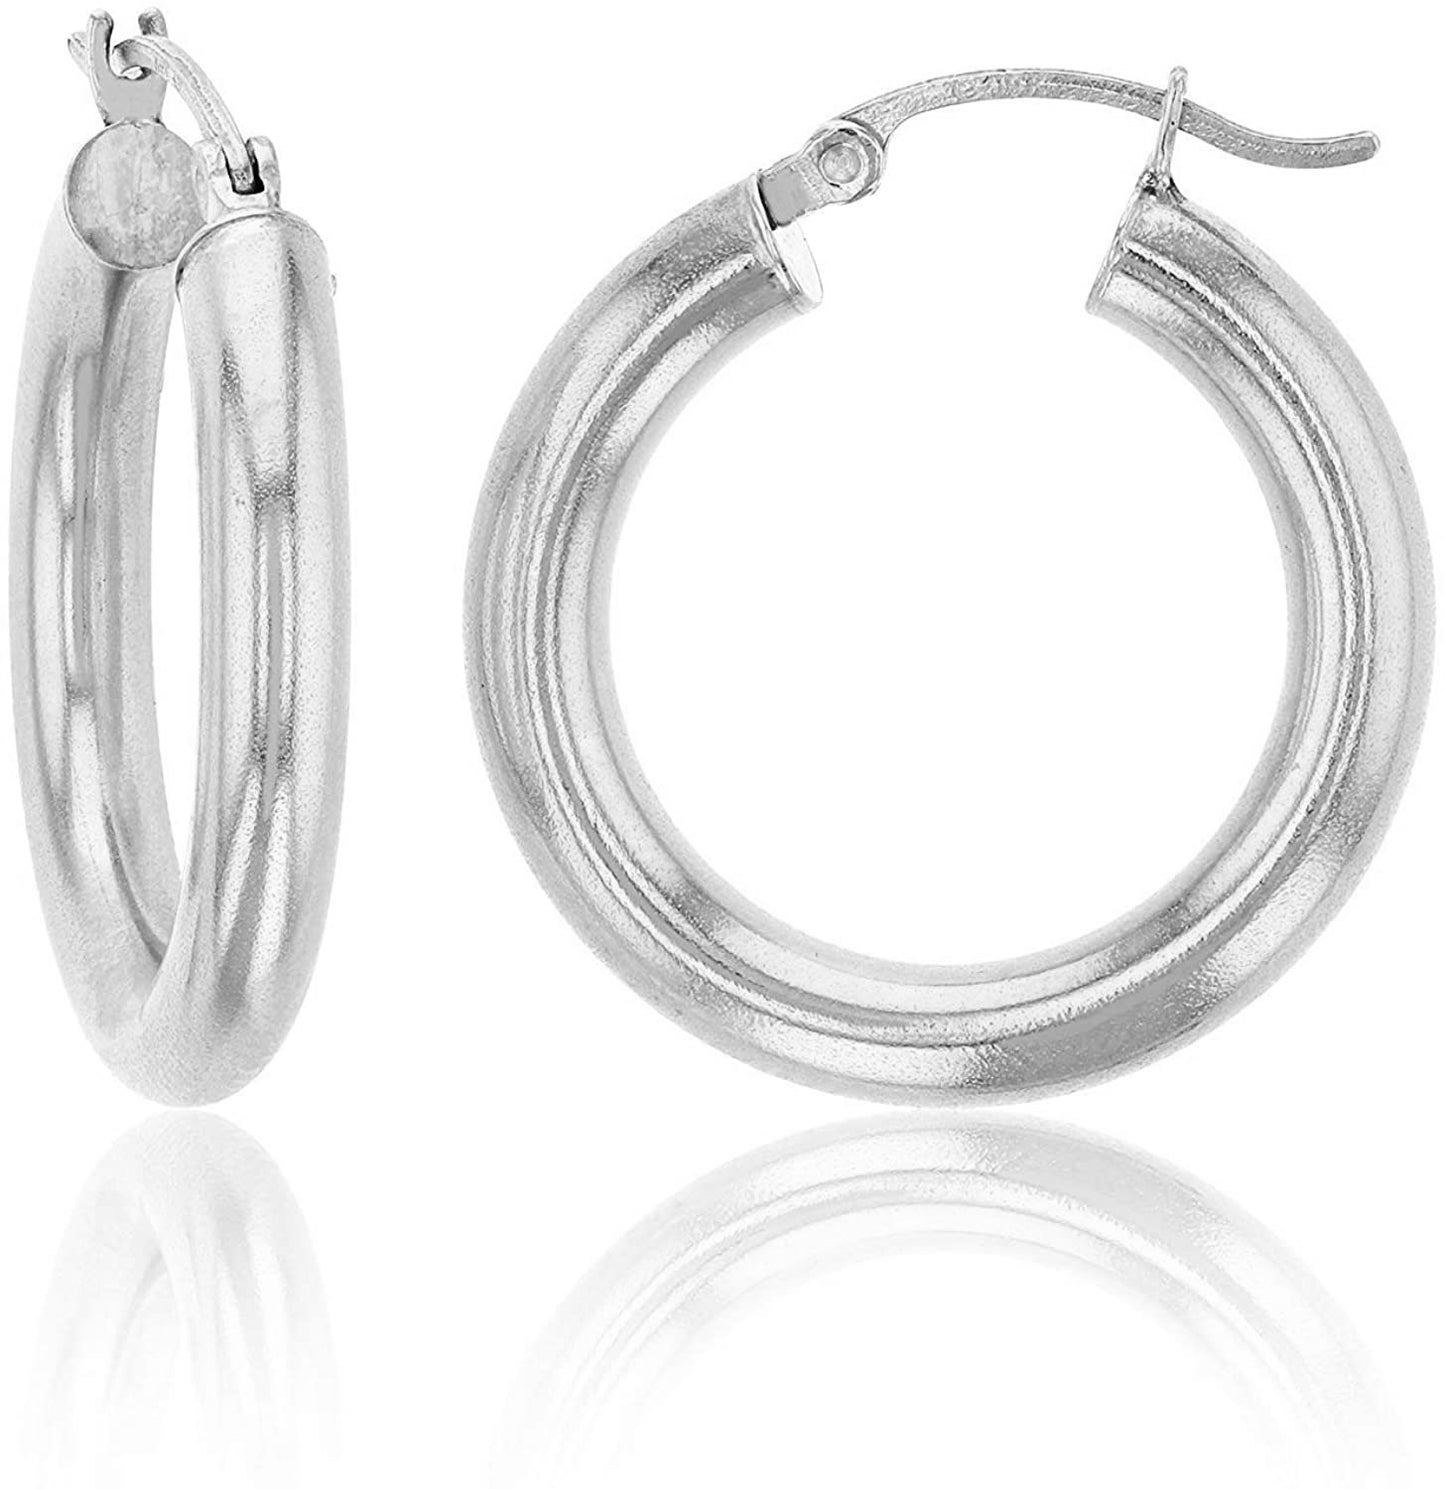 REAL 14K White Gold Earrings For Women| 4MM Classic Hoops Earrings